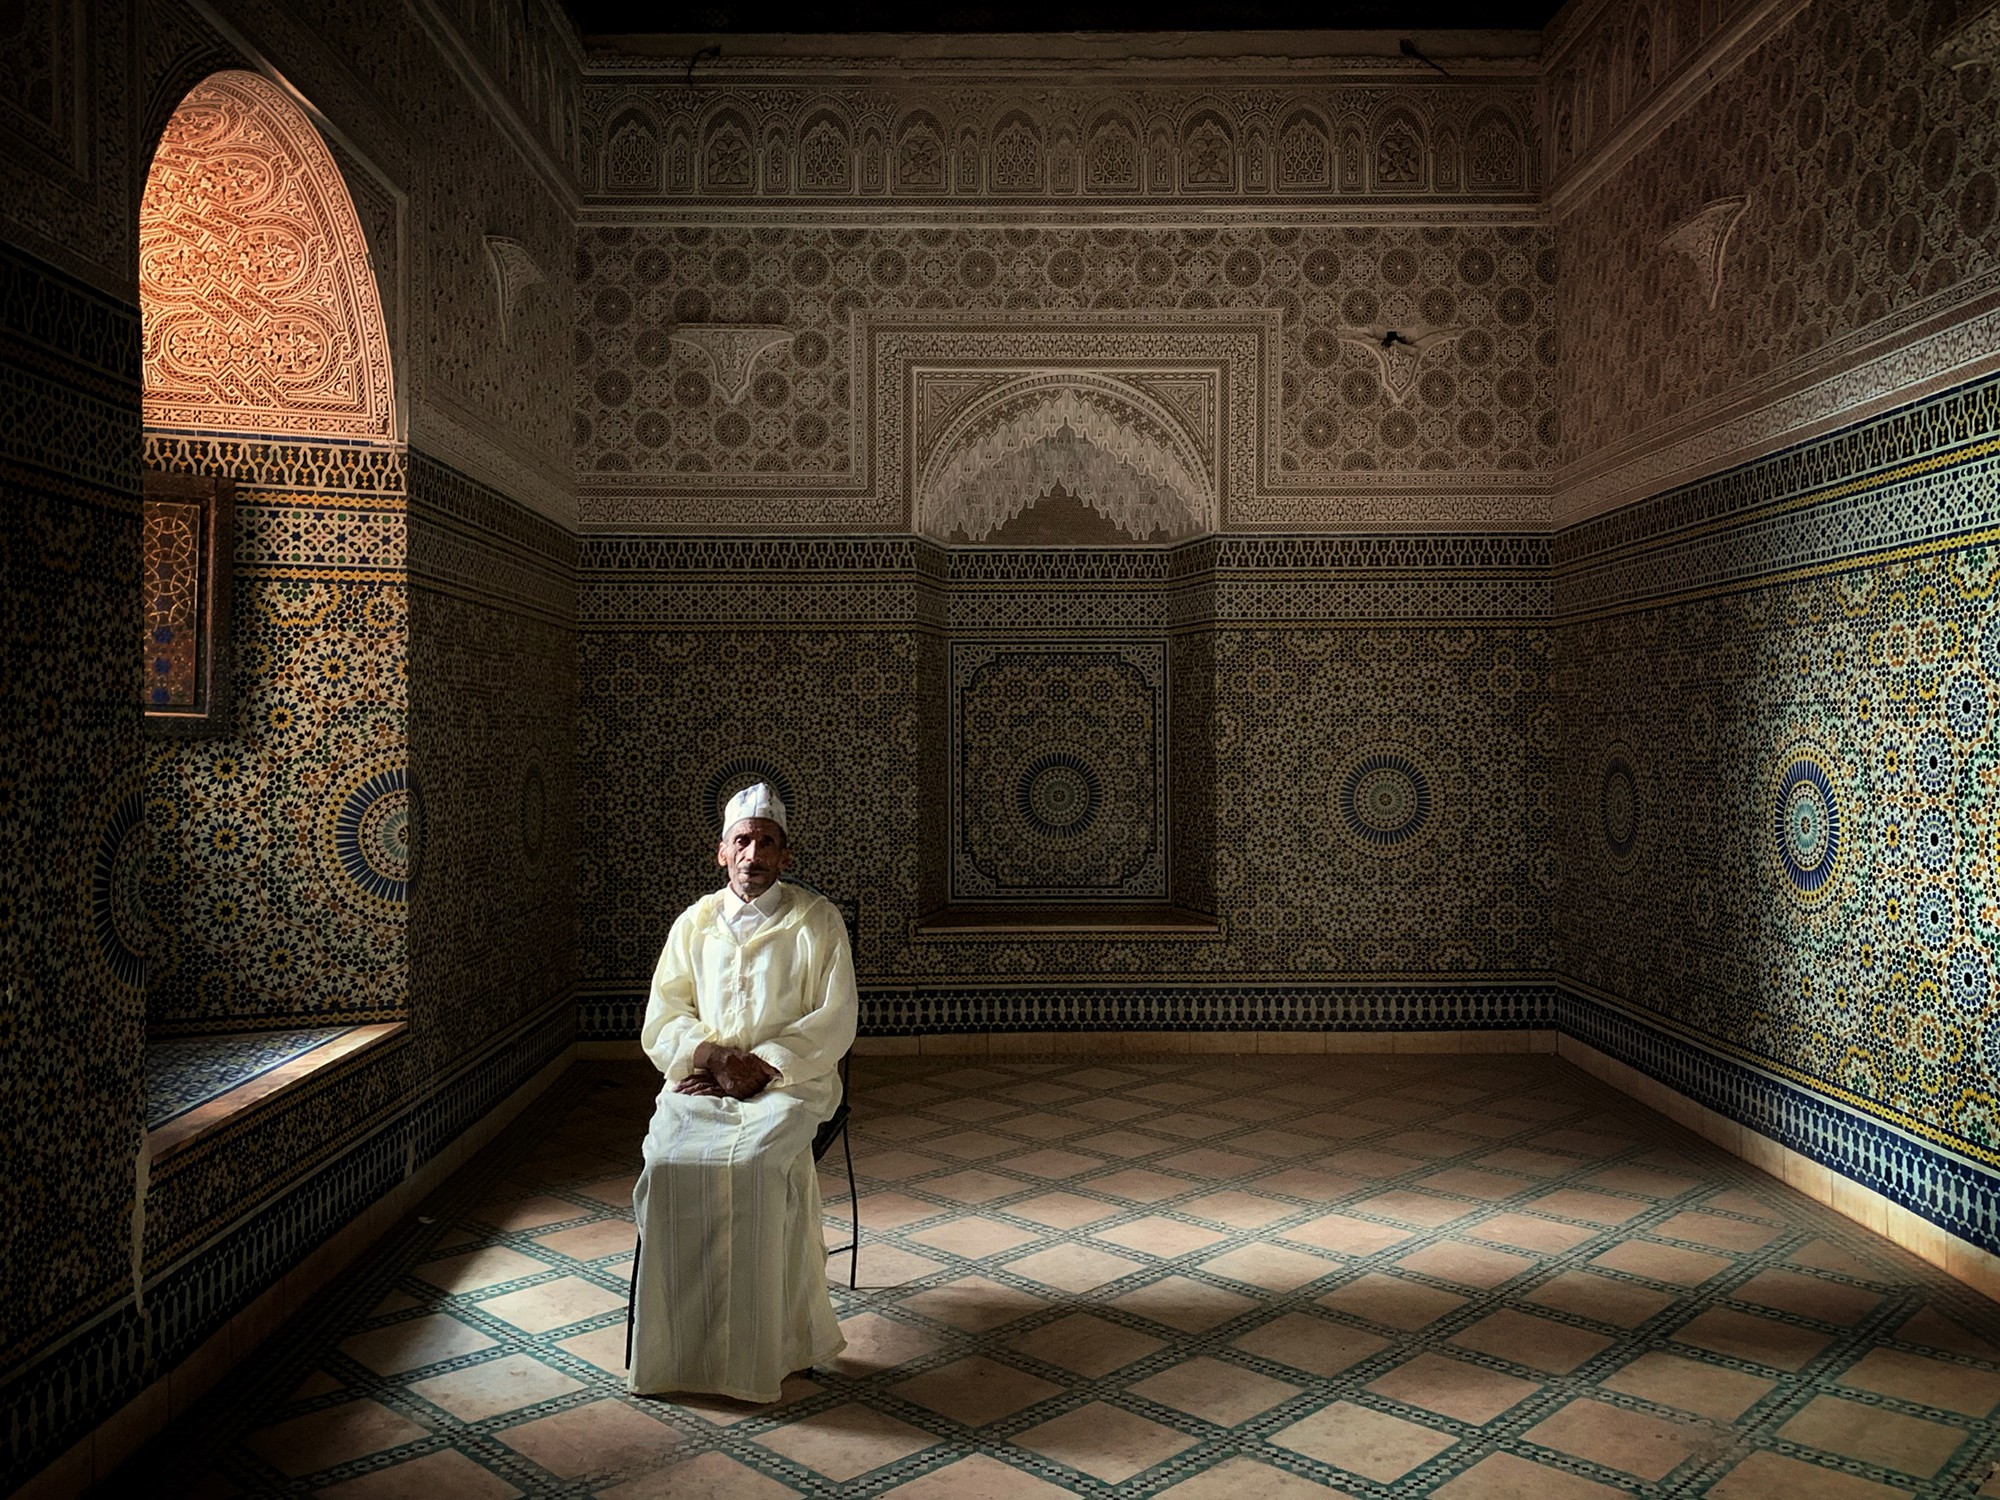 1 место в категории Портрет, 2020. Красивая изоляция. Варзазат, Марокко. Автор Мона Джумаан